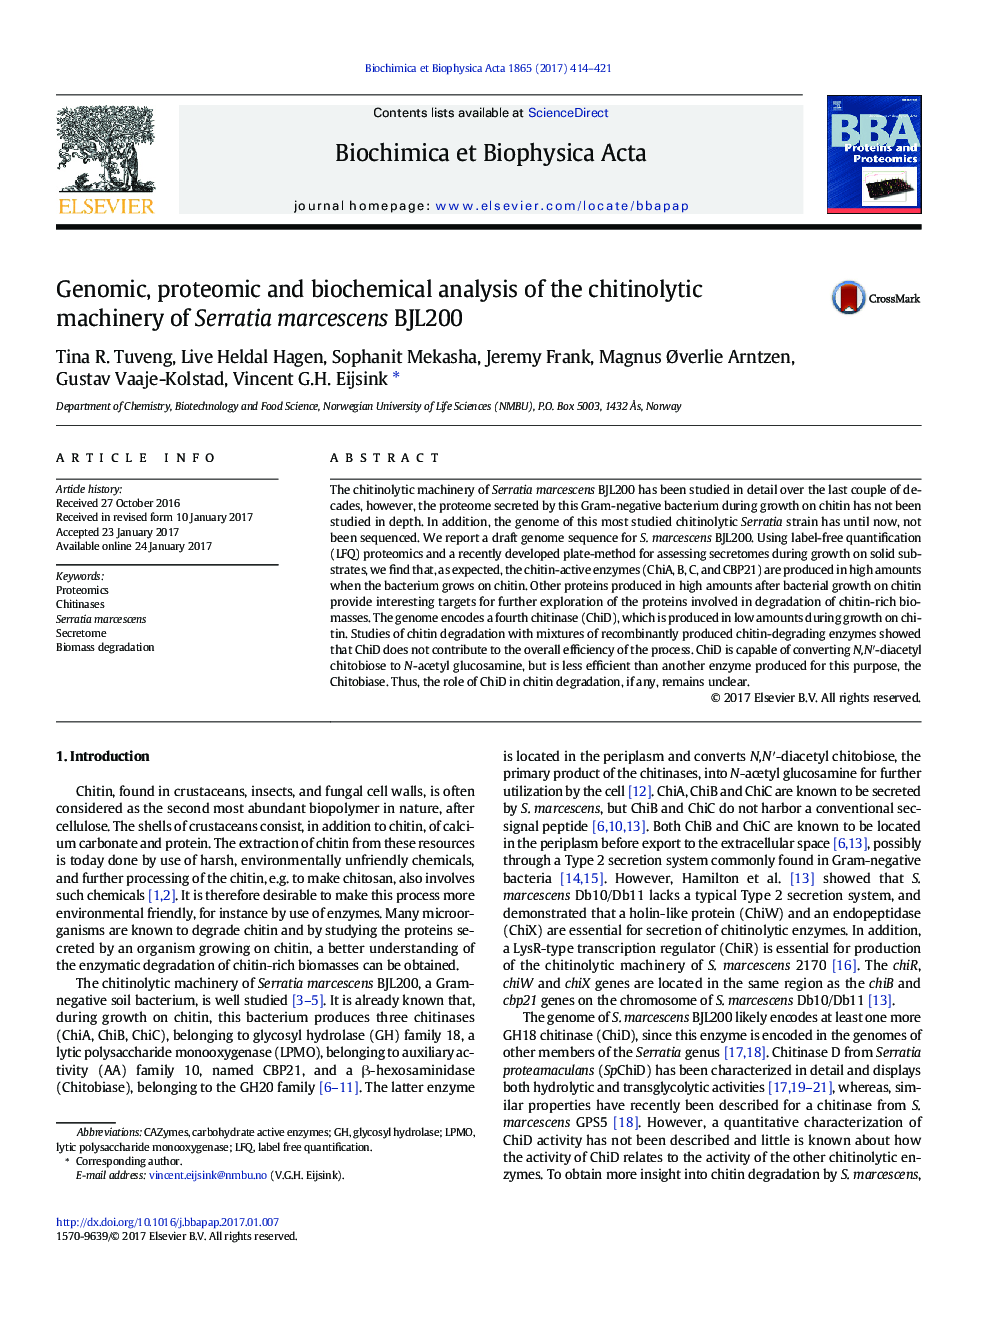 Genomic, proteomic and biochemical analysis of the chitinolytic machinery of Serratia marcescens BJL200